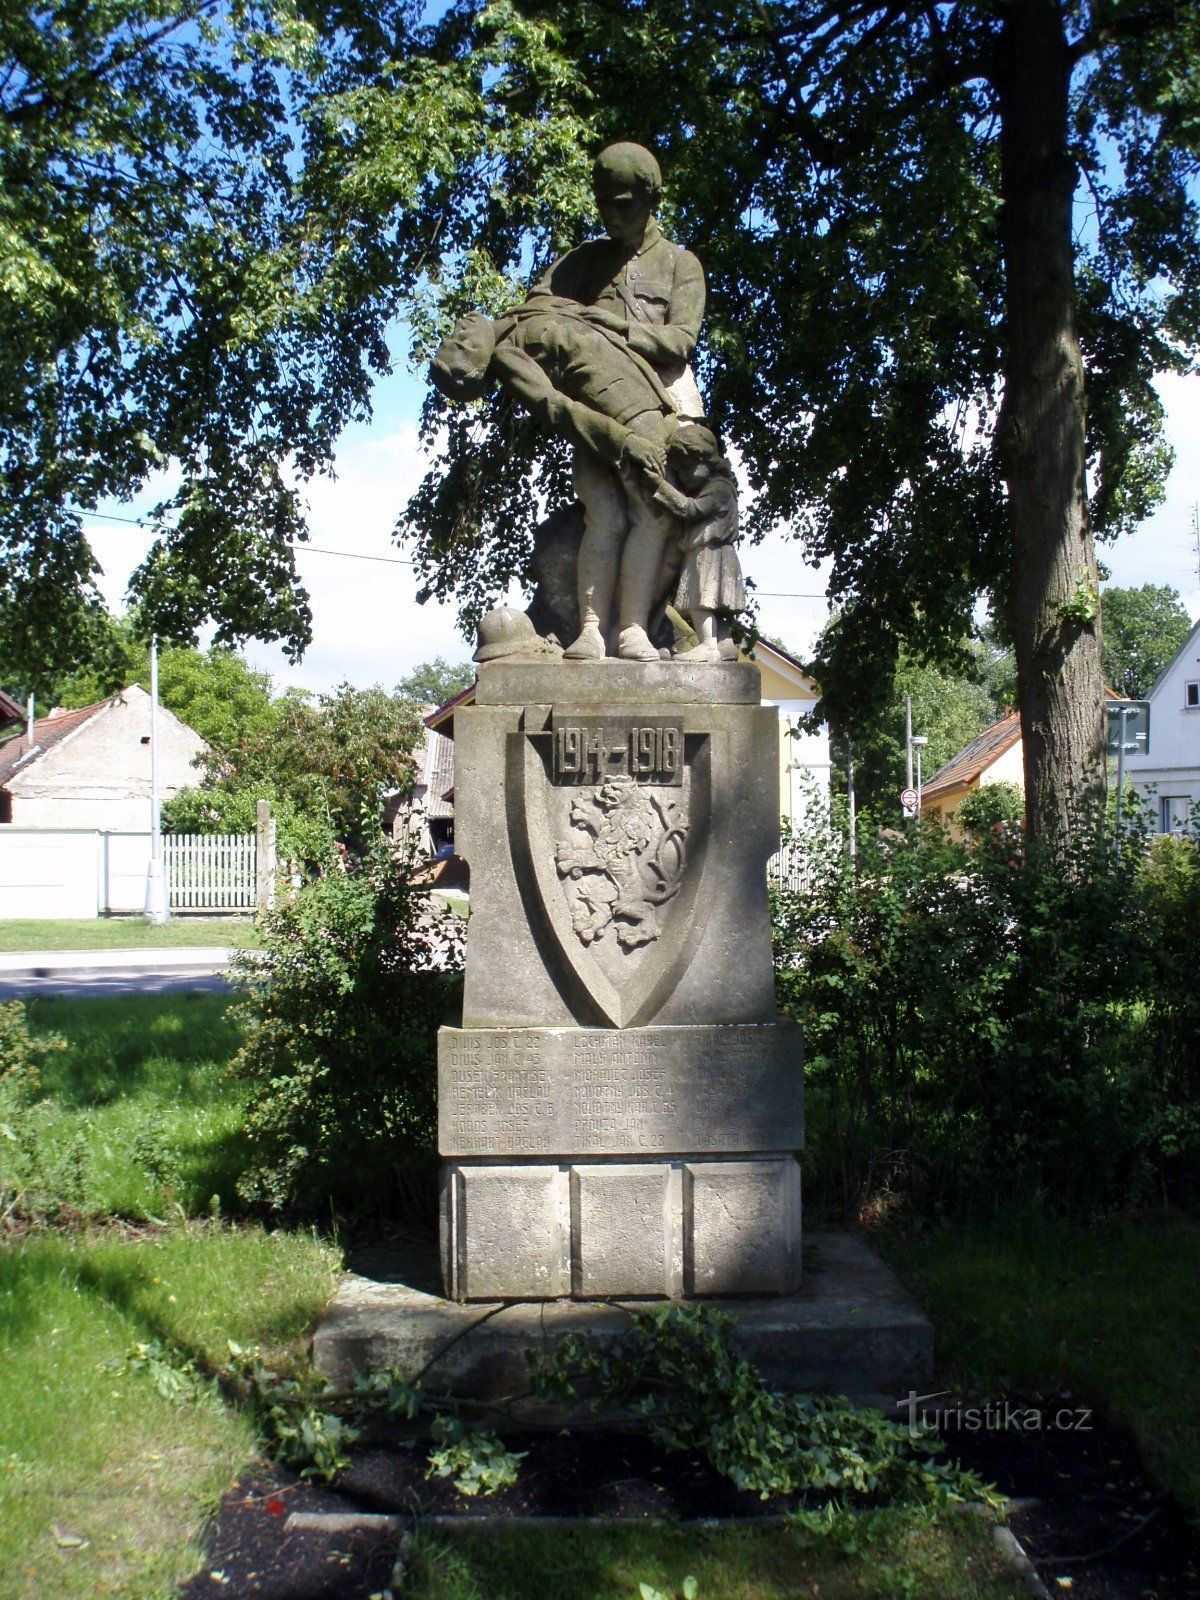 Kaatuneiden muistomerkki Malšov Lhotassa (Hradec Králové, 1.6.2009)